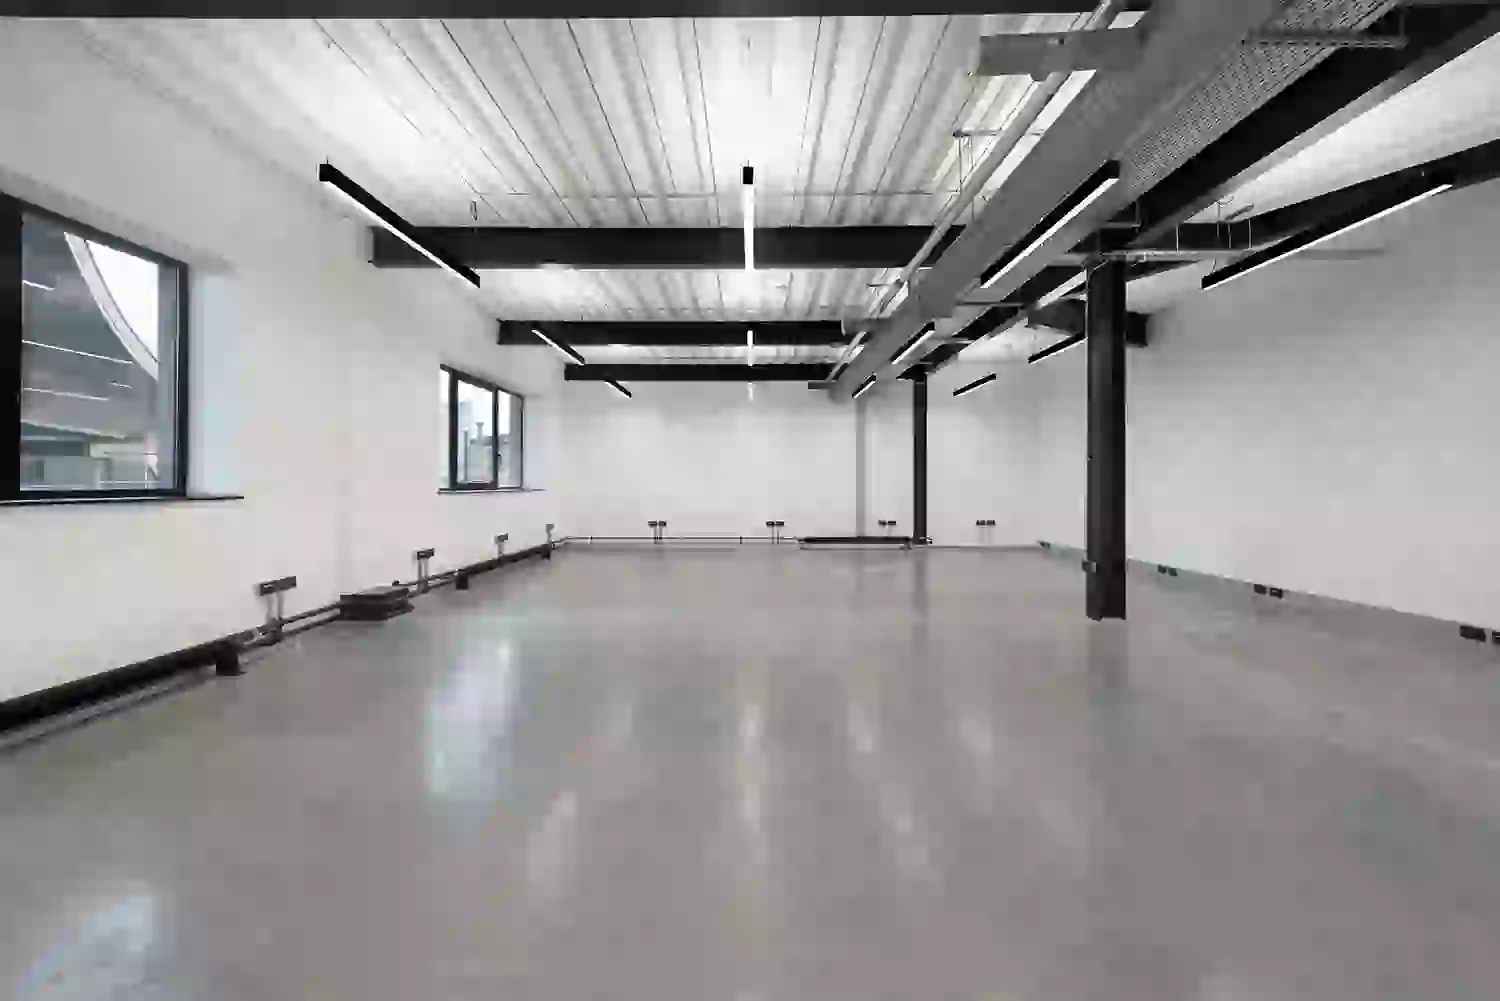 Office space to rent at Westbourne Studios, 242 Acklam Road, Portobello, London, unit WE.118, 985 sq ft (91 sq m).